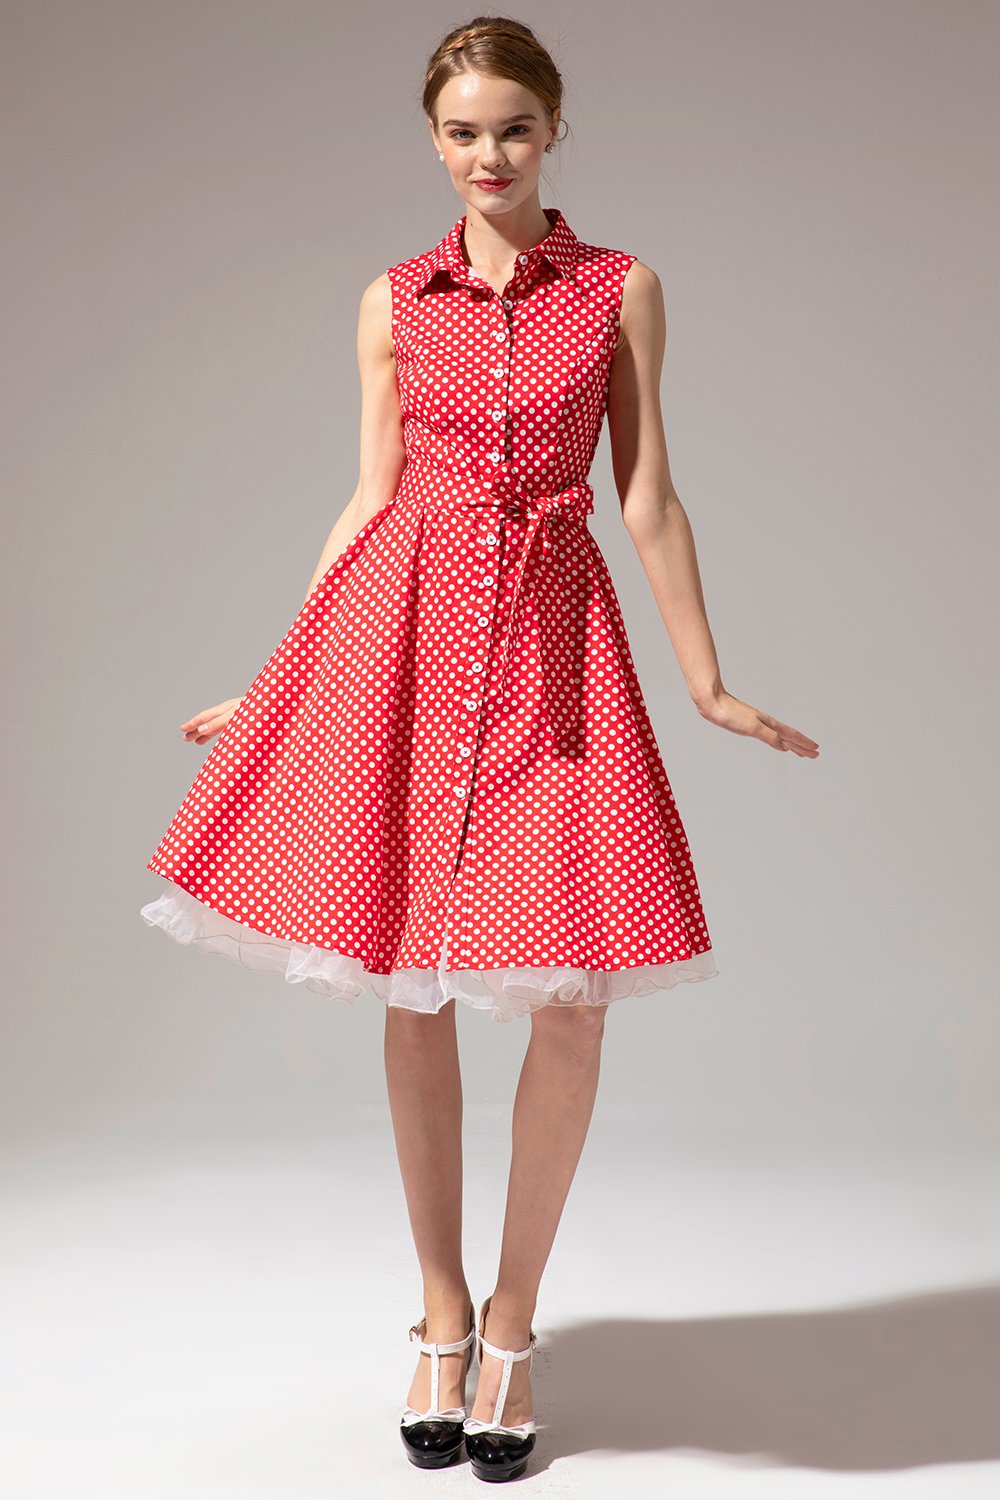 Vestido polka dot de 1950 sem mangas